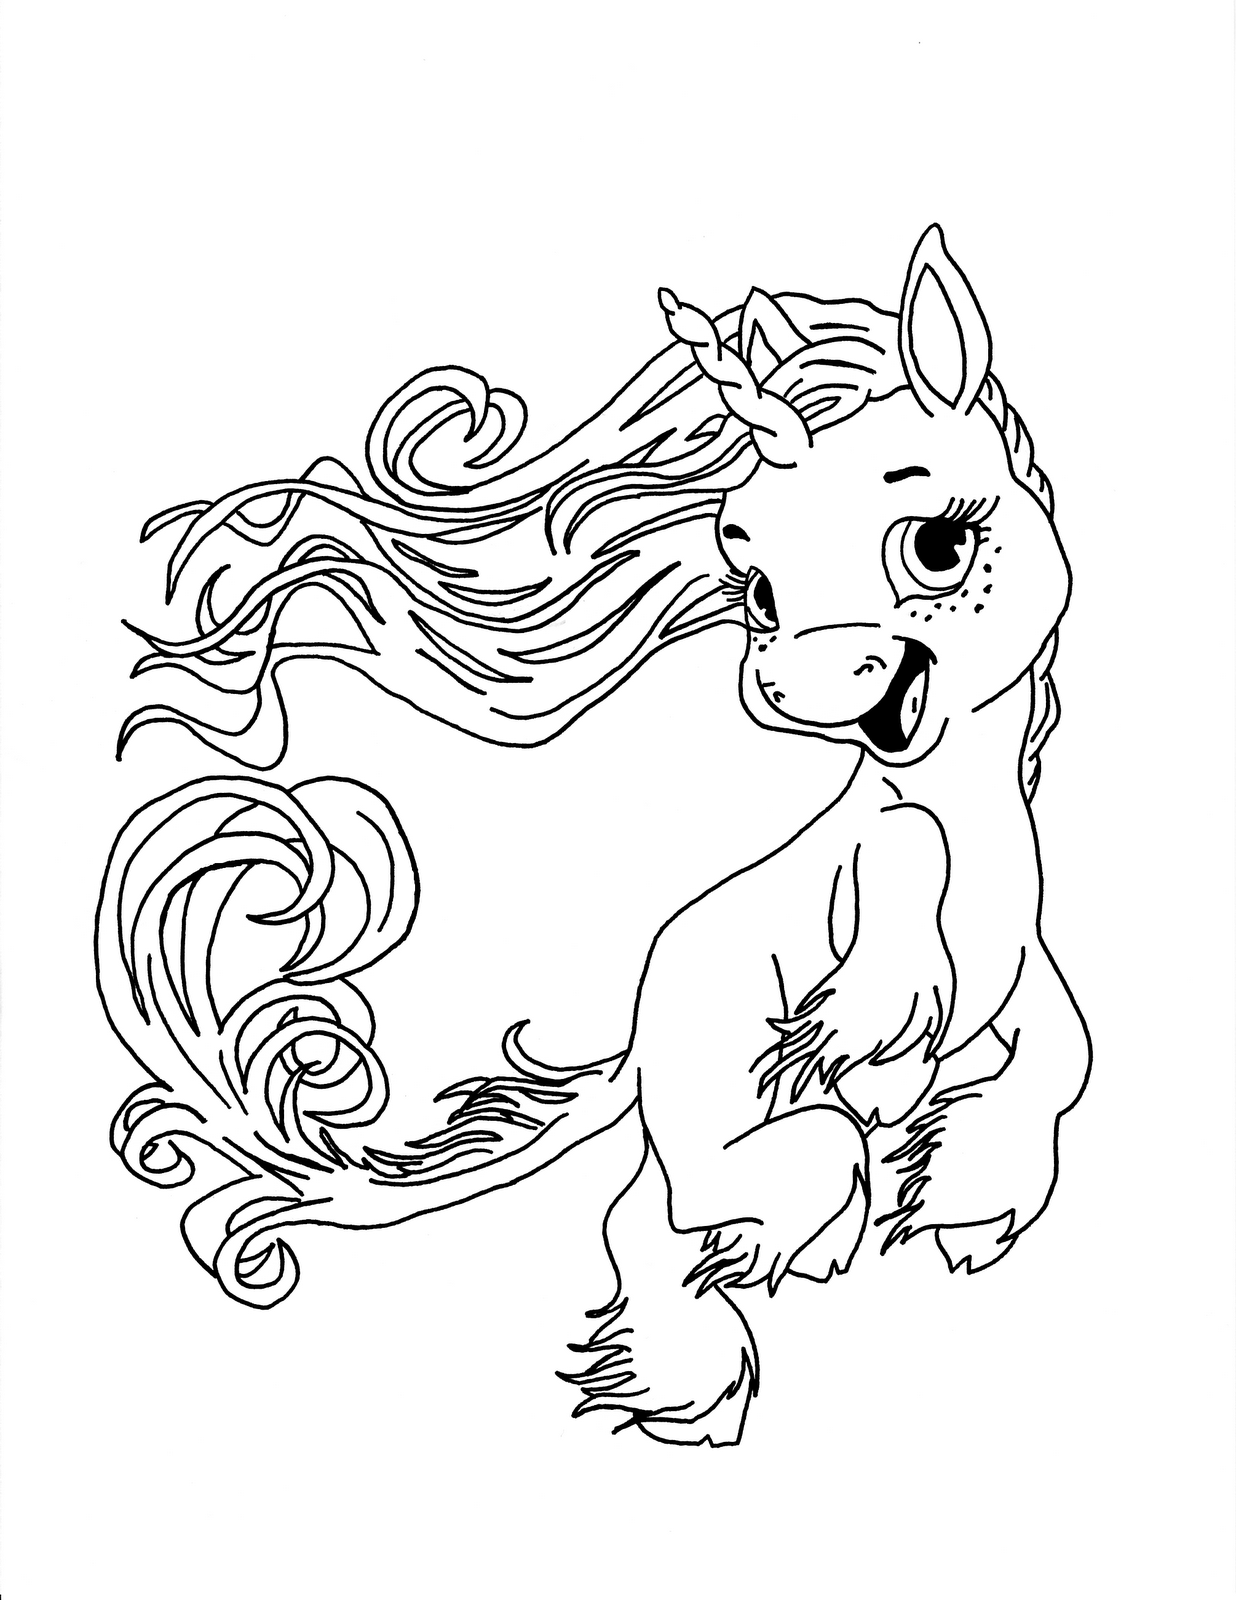 Featured image of post Realistic Unicorn Color Page : Einhorn pferd realistisch zeichnen lernen 🦄 how to draw a realistic unicorn horse?